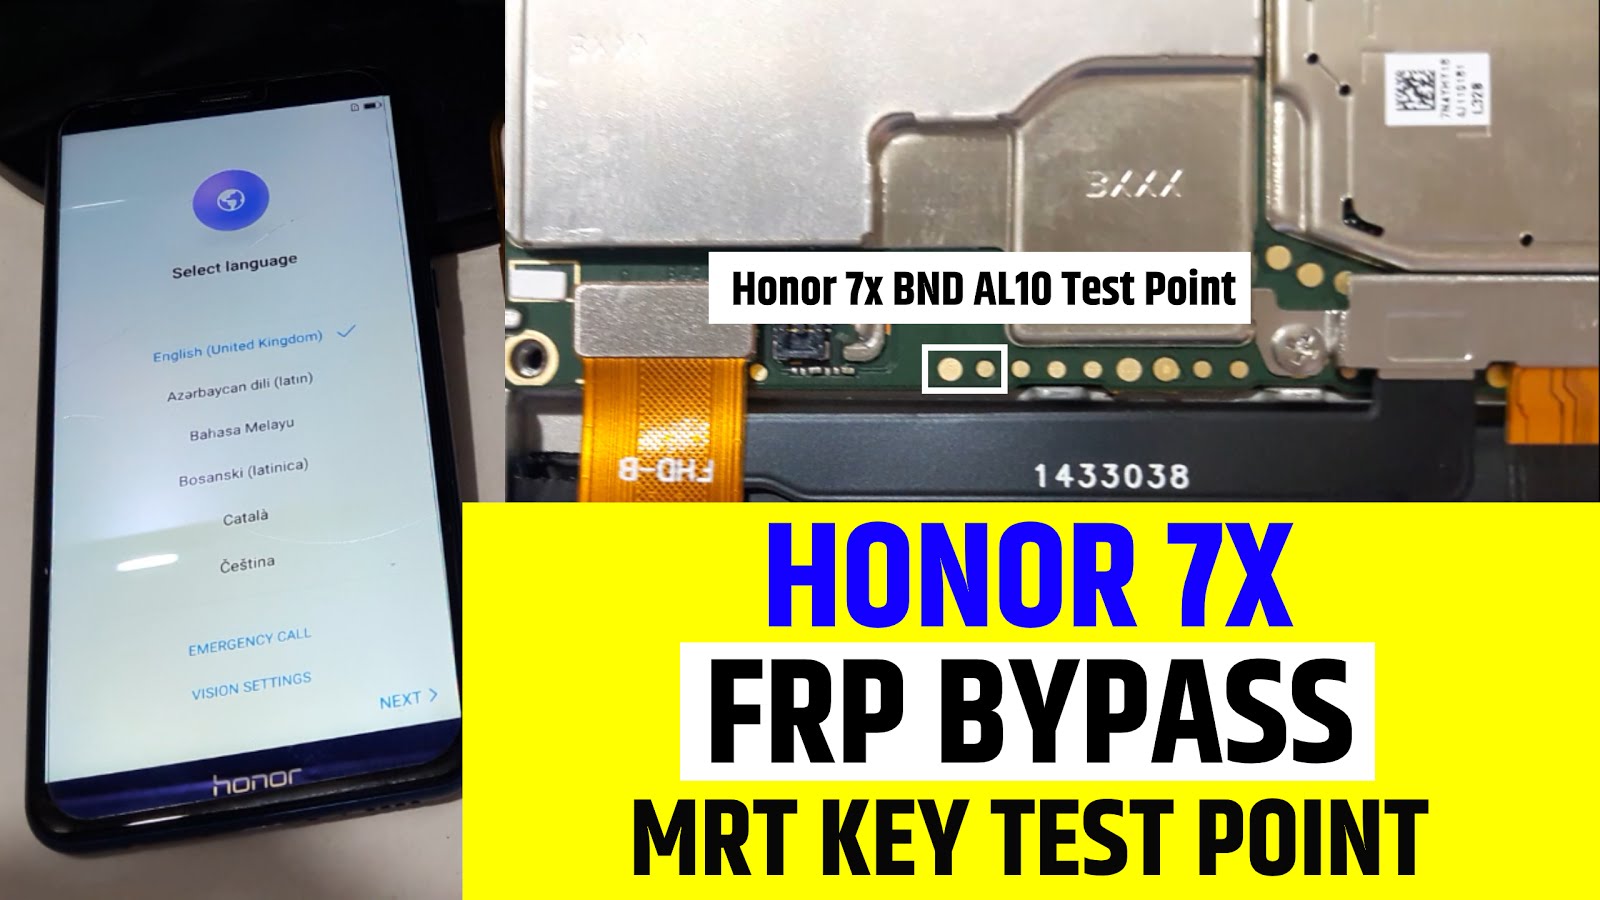 Frp unlock honor. BND-l21 Honor testpoint. Honor 7x (BND-l21) testpoint. BND-al10 testpoint. FRP Lock Honor.